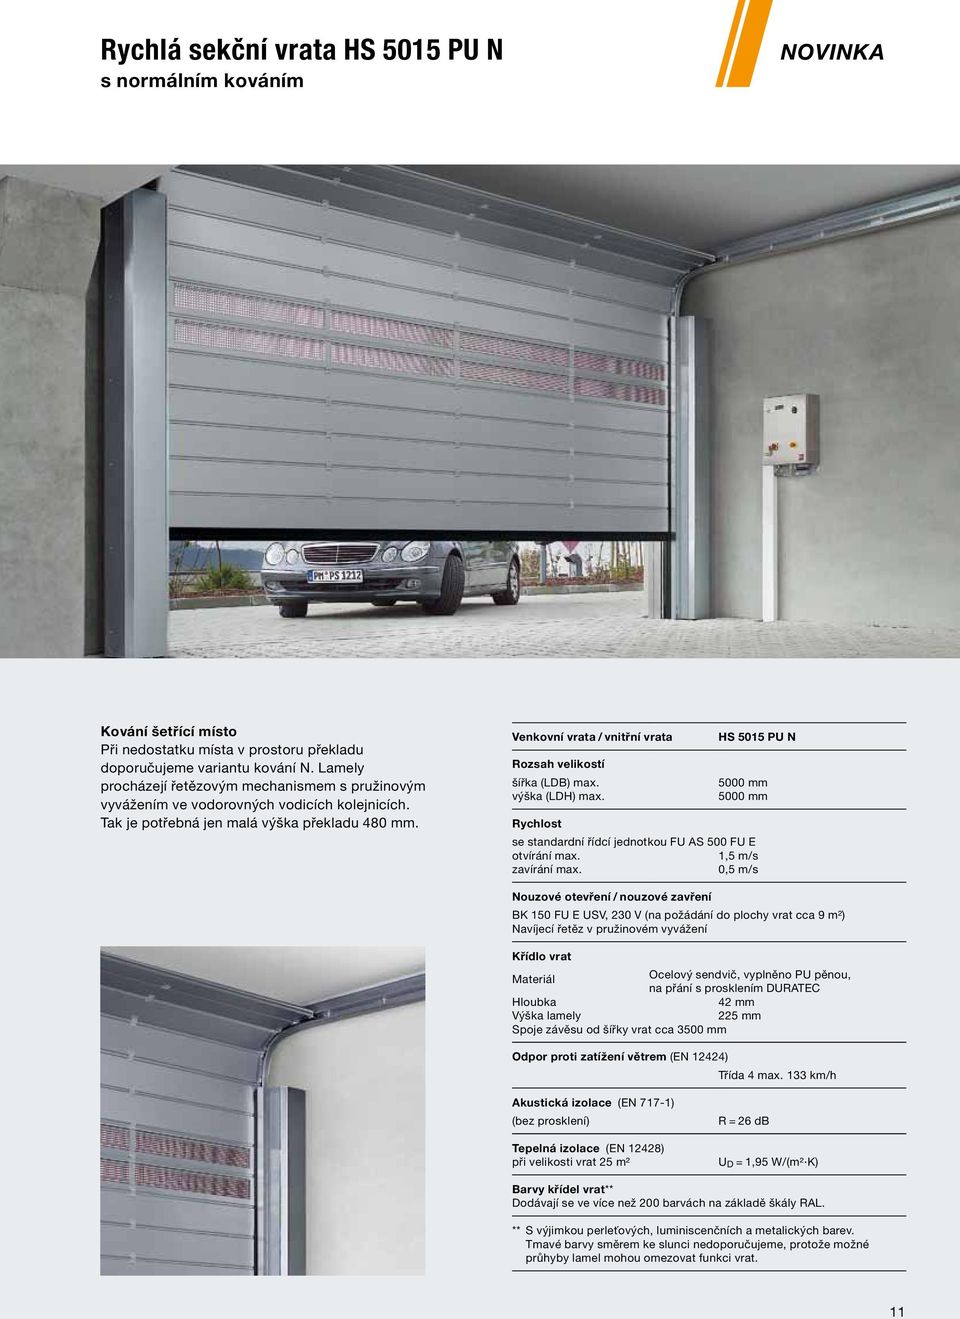 Venkovní vrata / vnitřní vrata HS 5015 PU N Rozsah velikostí šířka (LDB) max. 5000 mm výška (LDH) max.